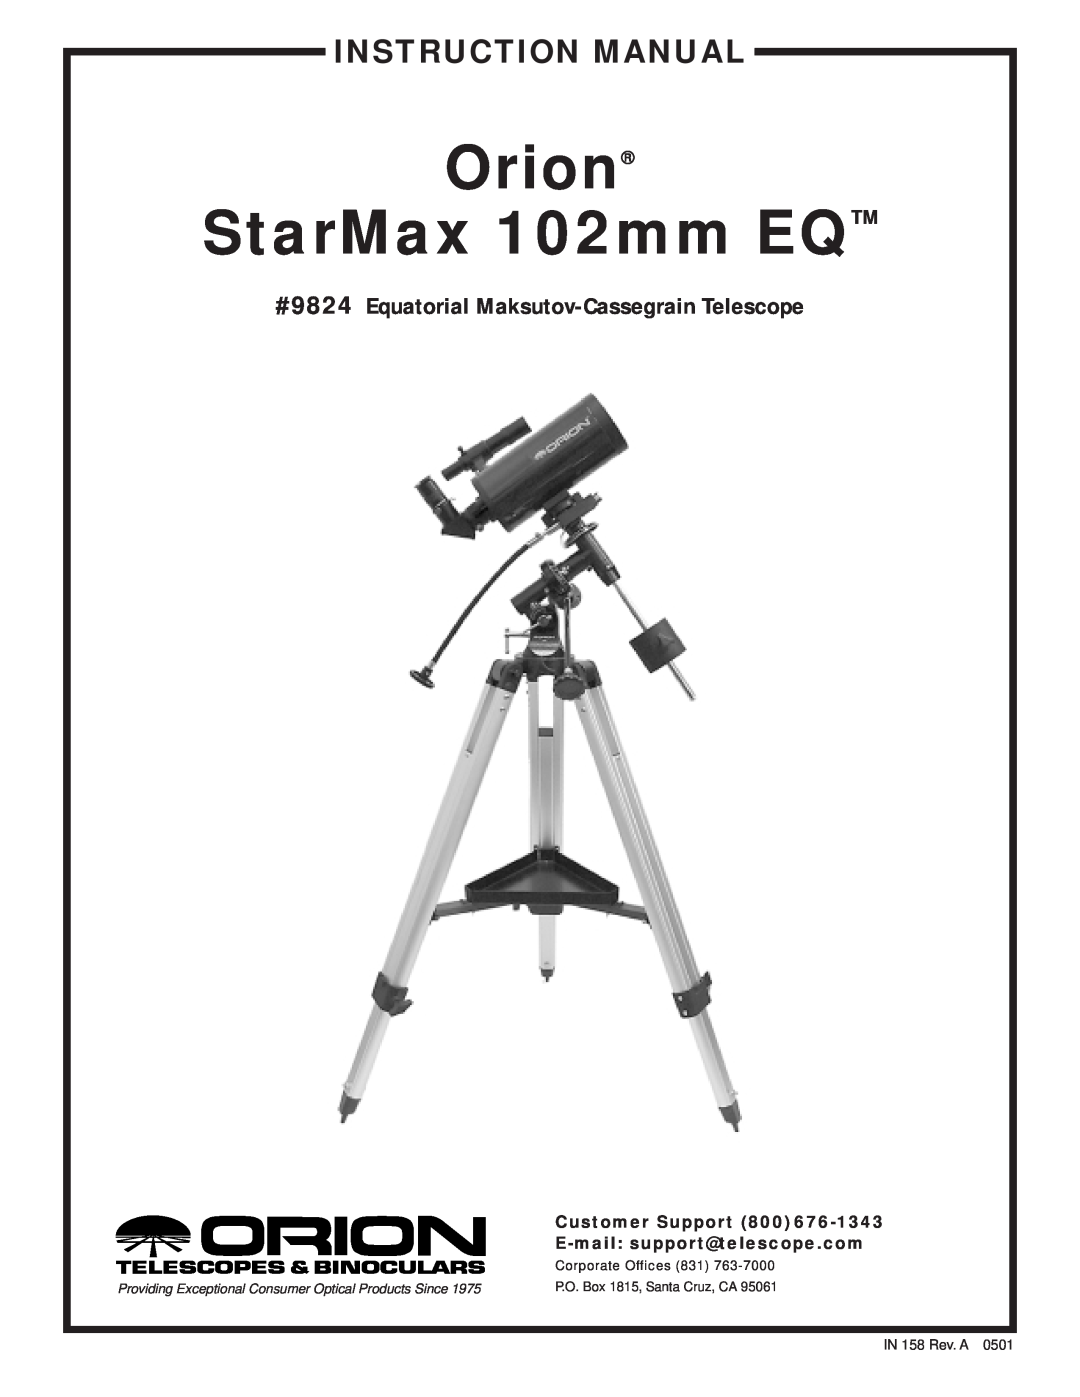 Orion instruction manual #9824 Equatorial Maksutov-Cassegrain Telescope, Customer Support, Orion StarMax 102mm EQ 